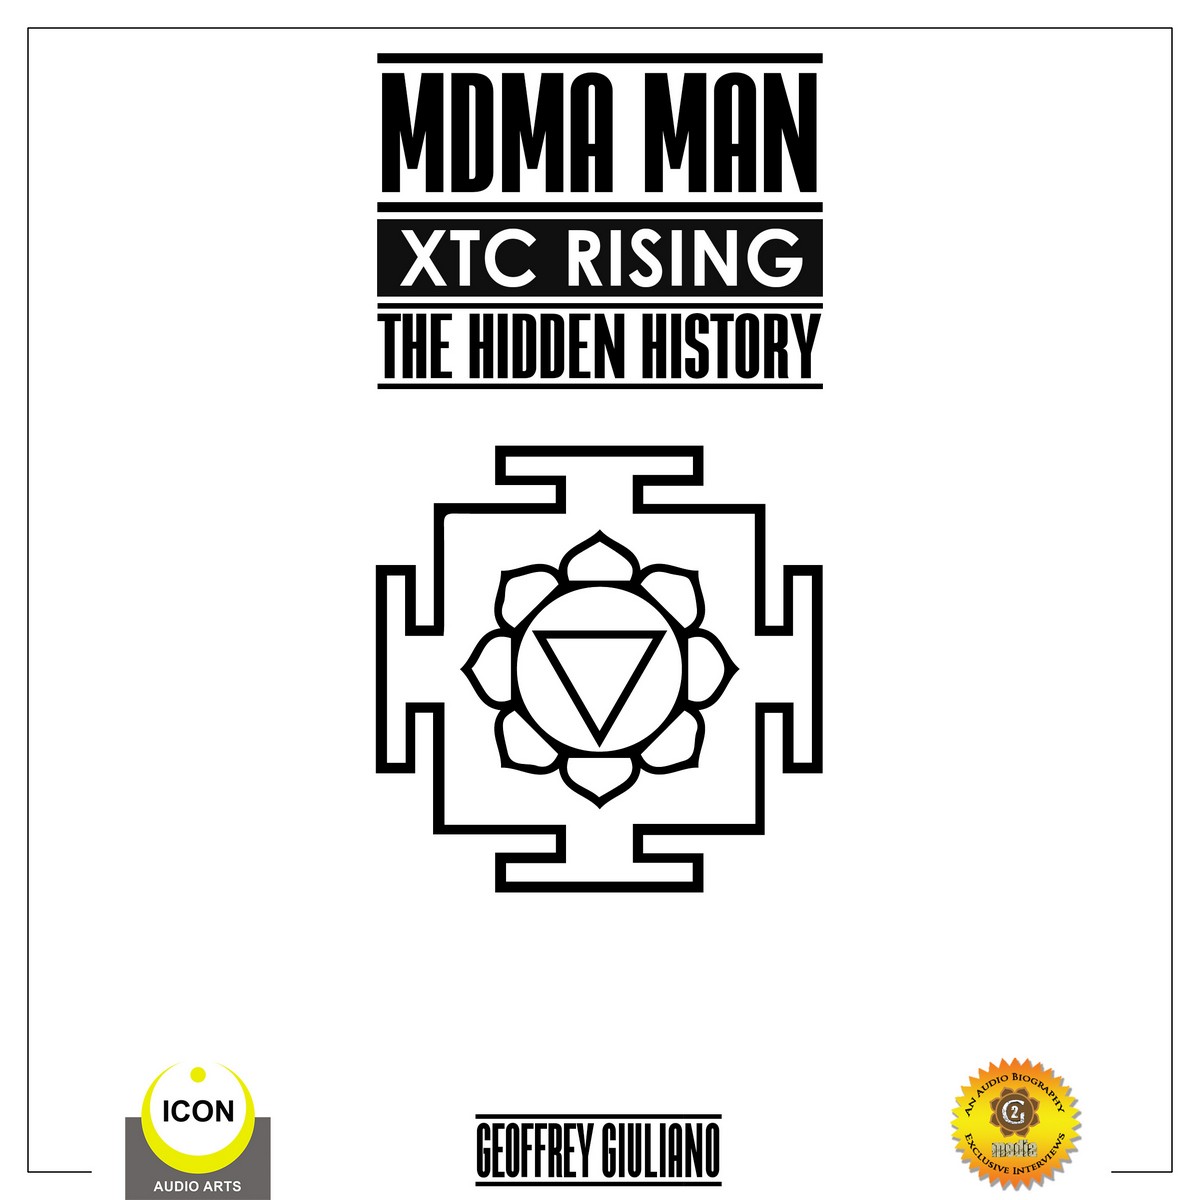 MDMA Man XTC Rising – The Hidden History